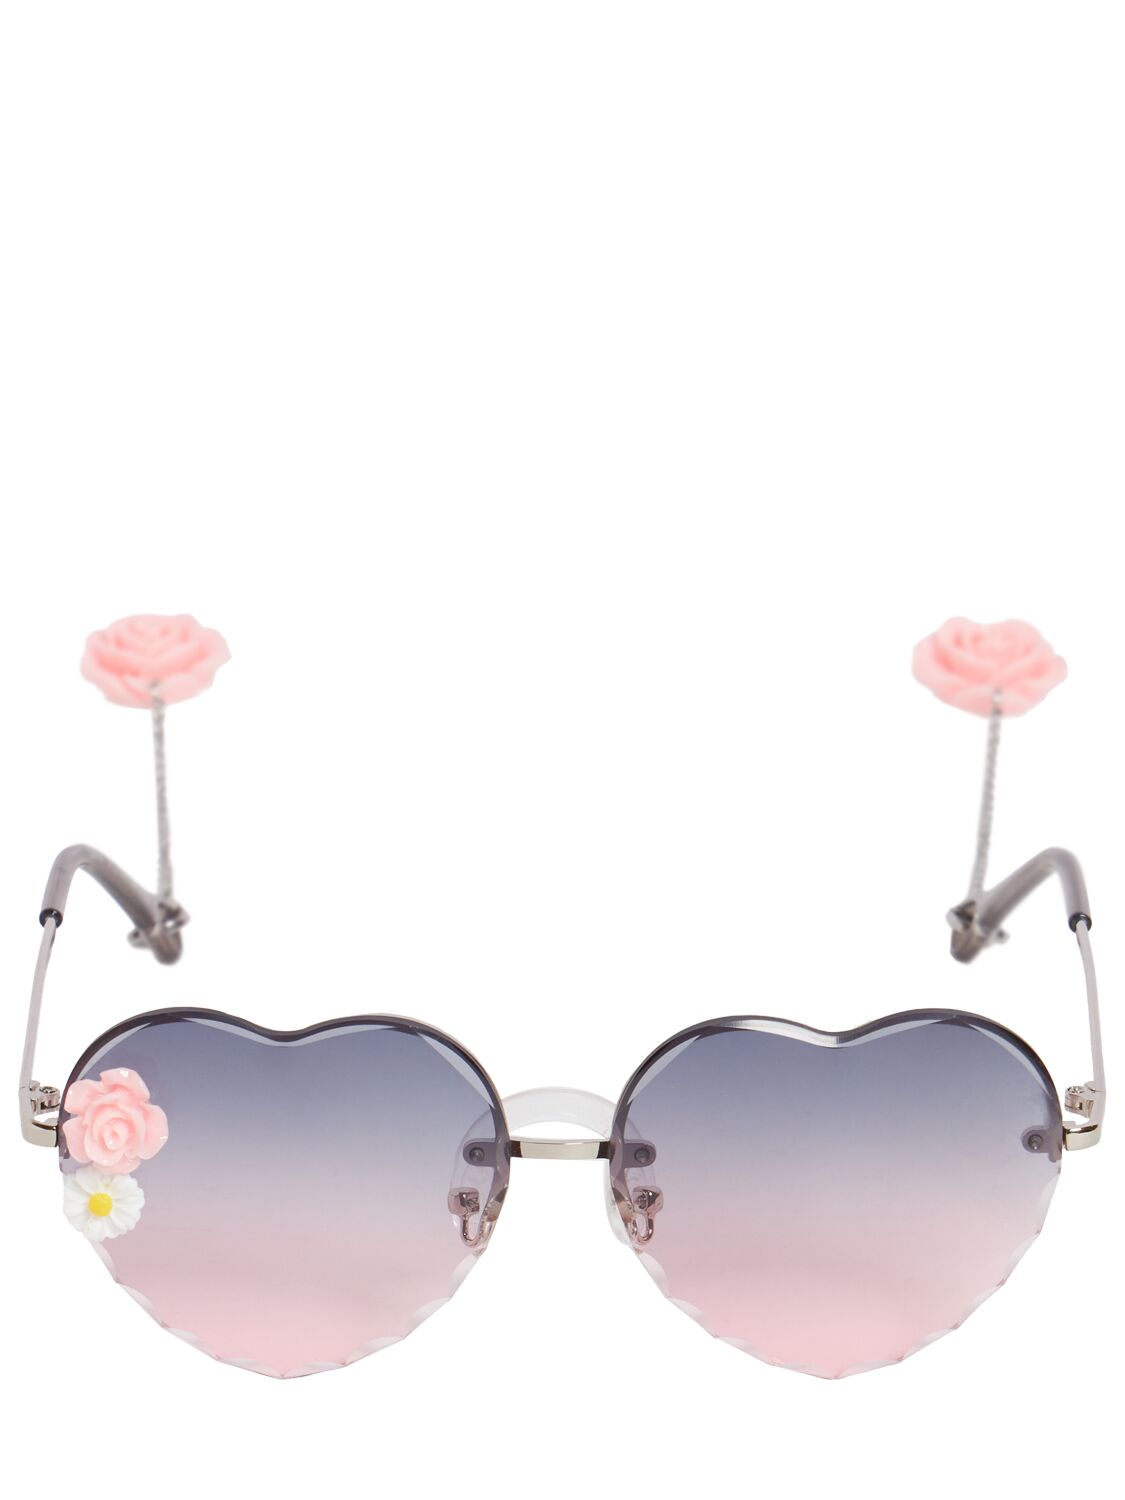 Image of Embellished Heart Sunglasses